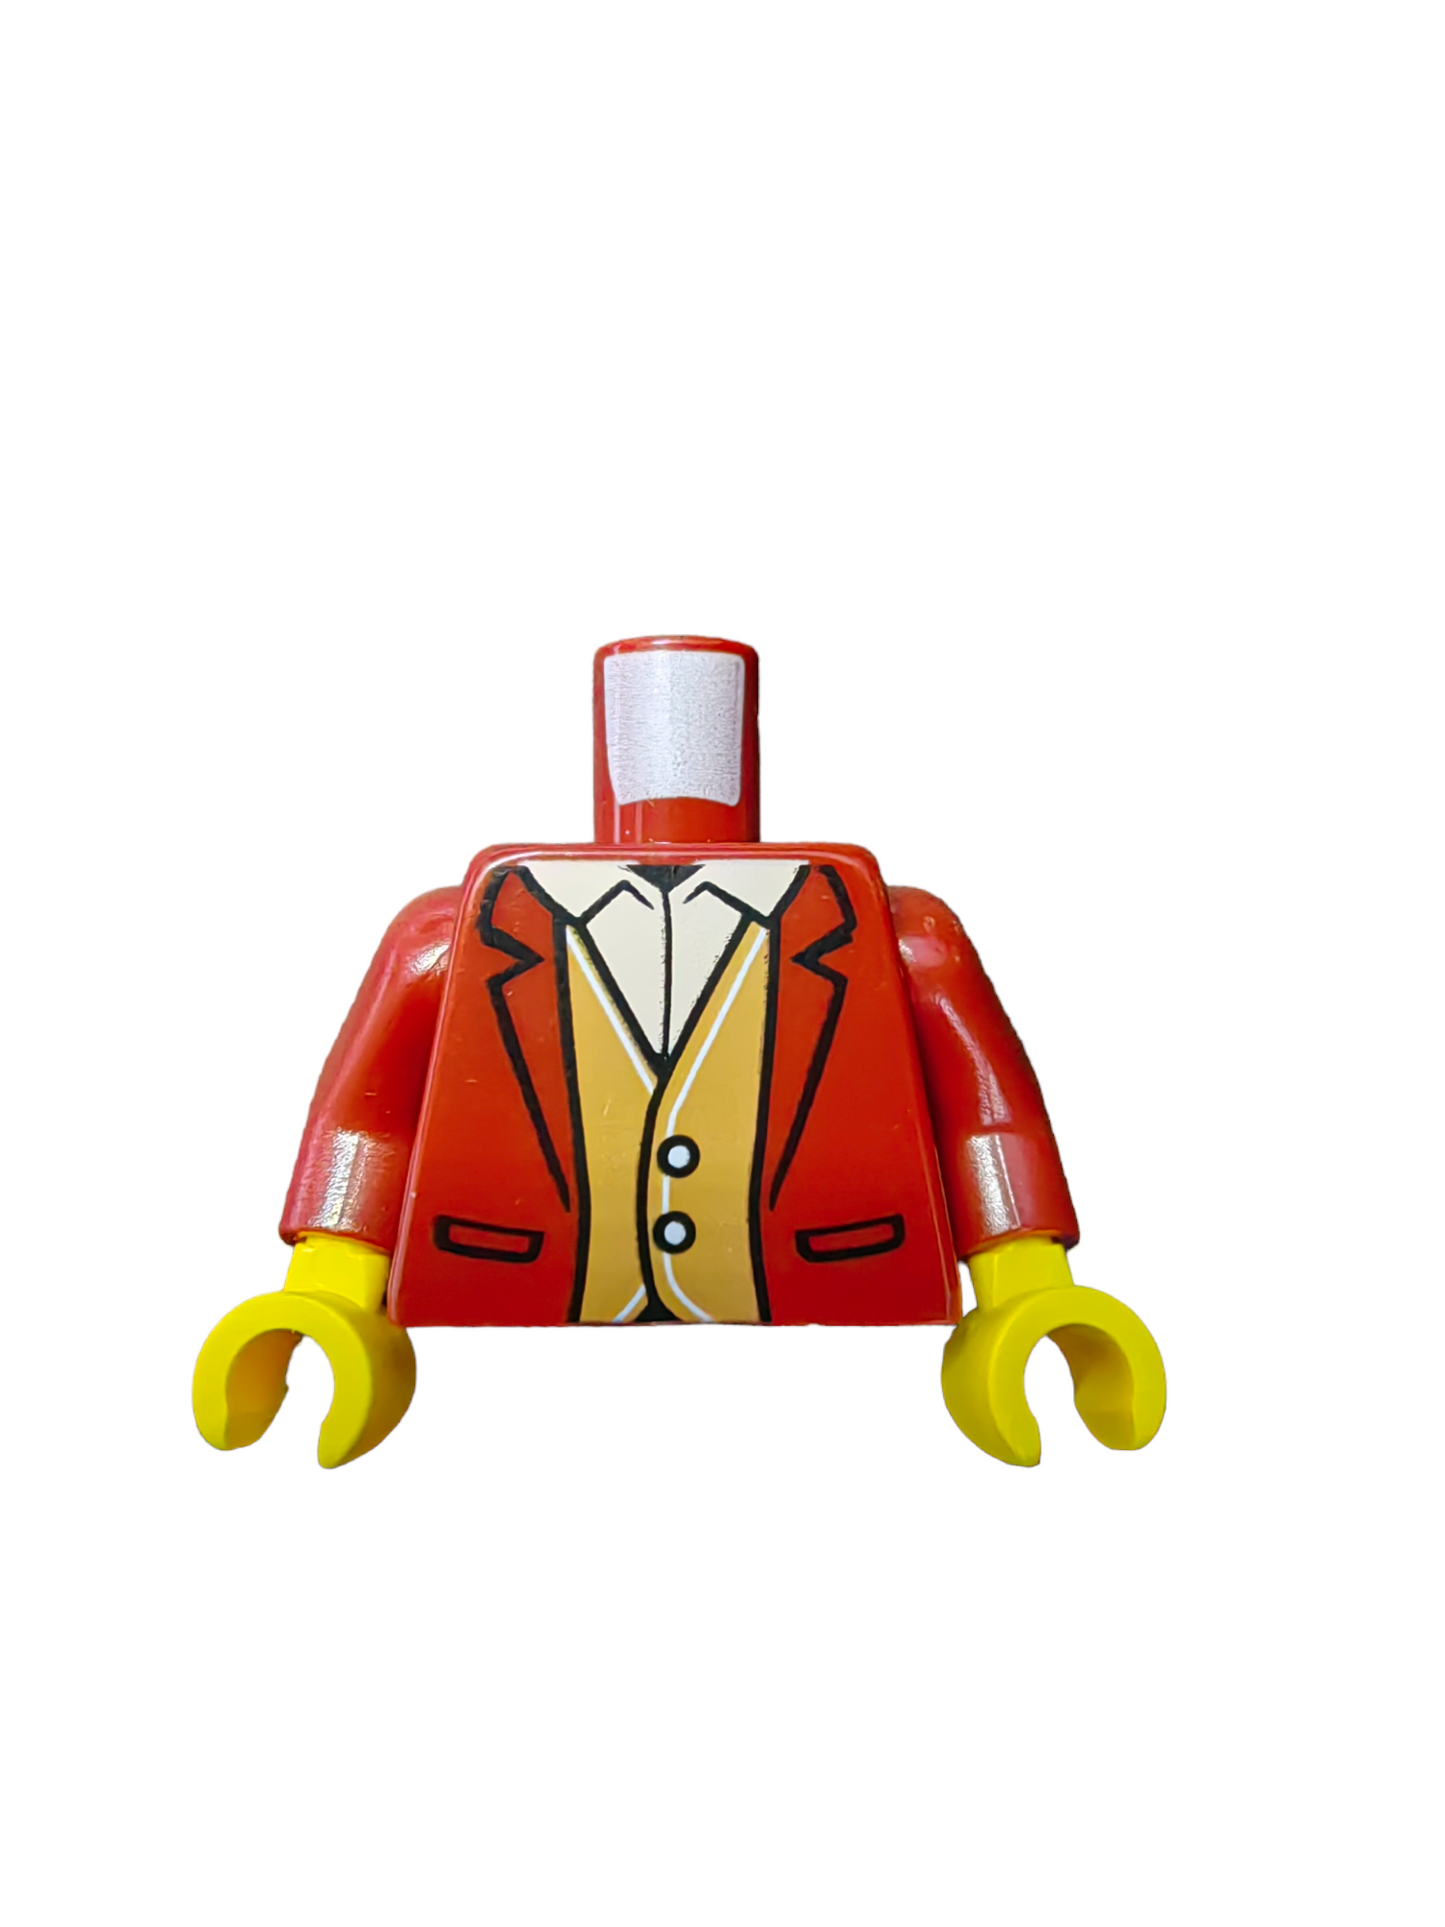 LEGO Torso, Reddish Suit Jacket over Gold Waistcoat - UB1138